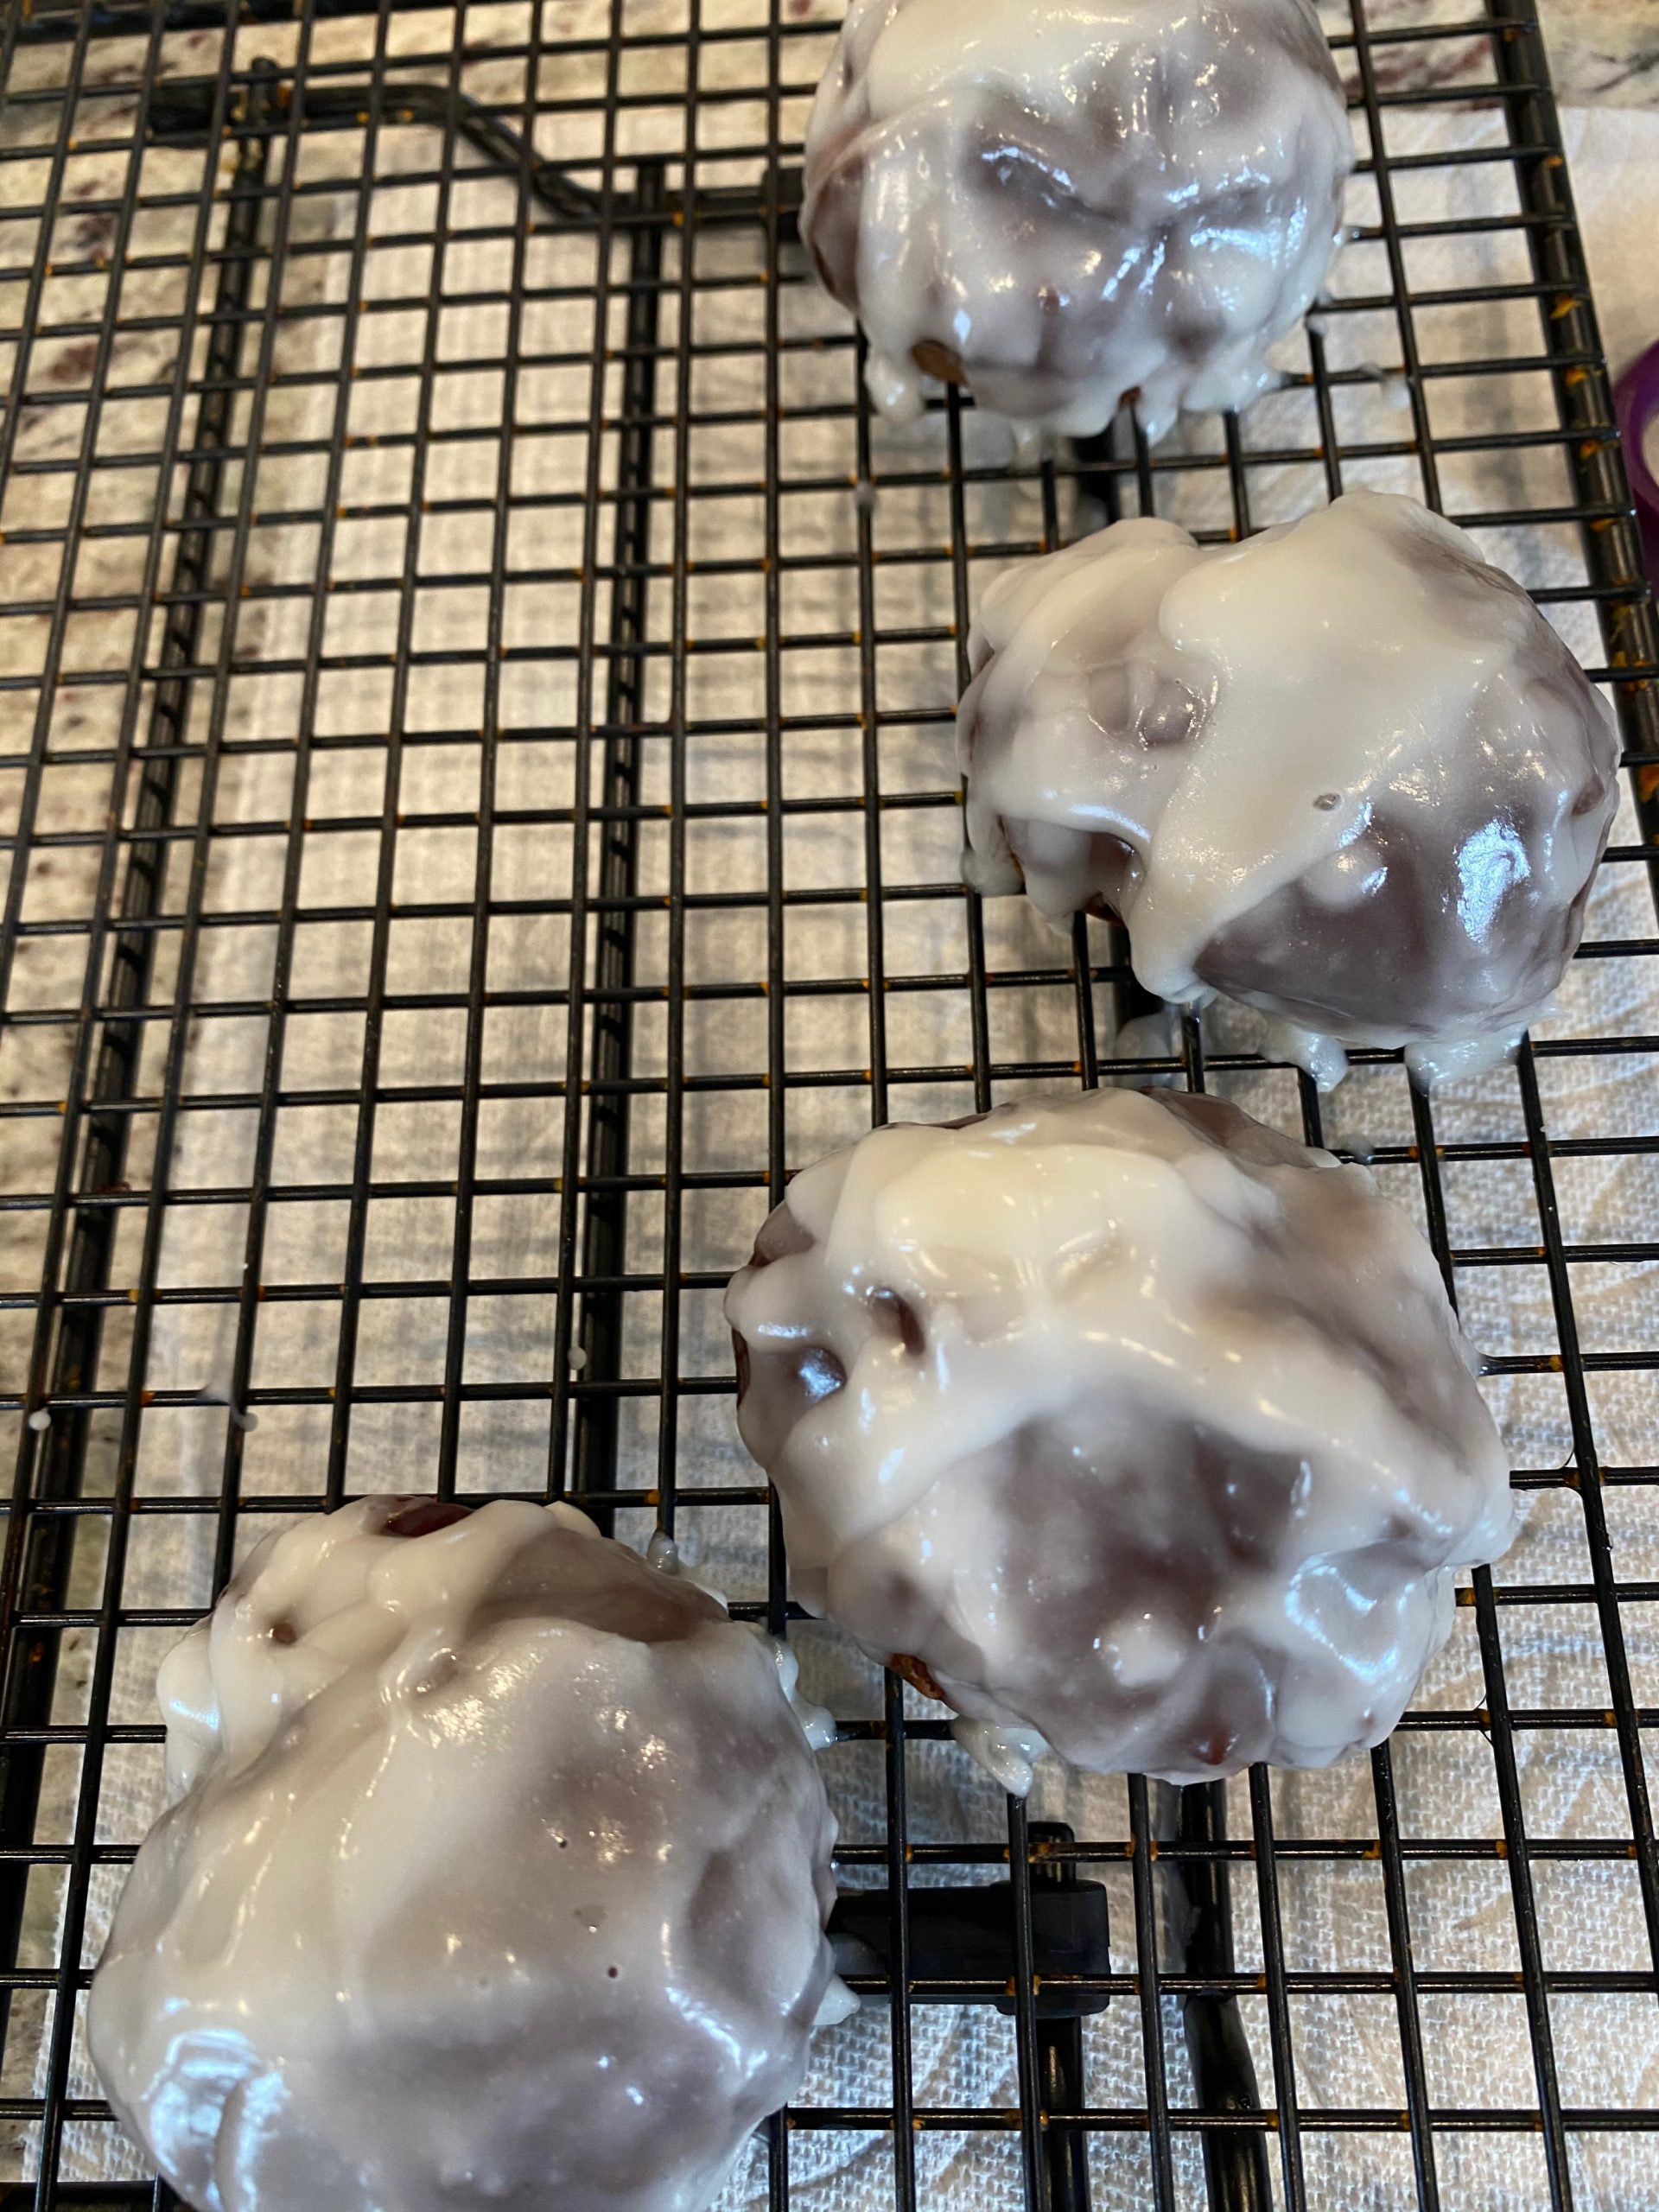 Chocolate Glazed Donut Holes